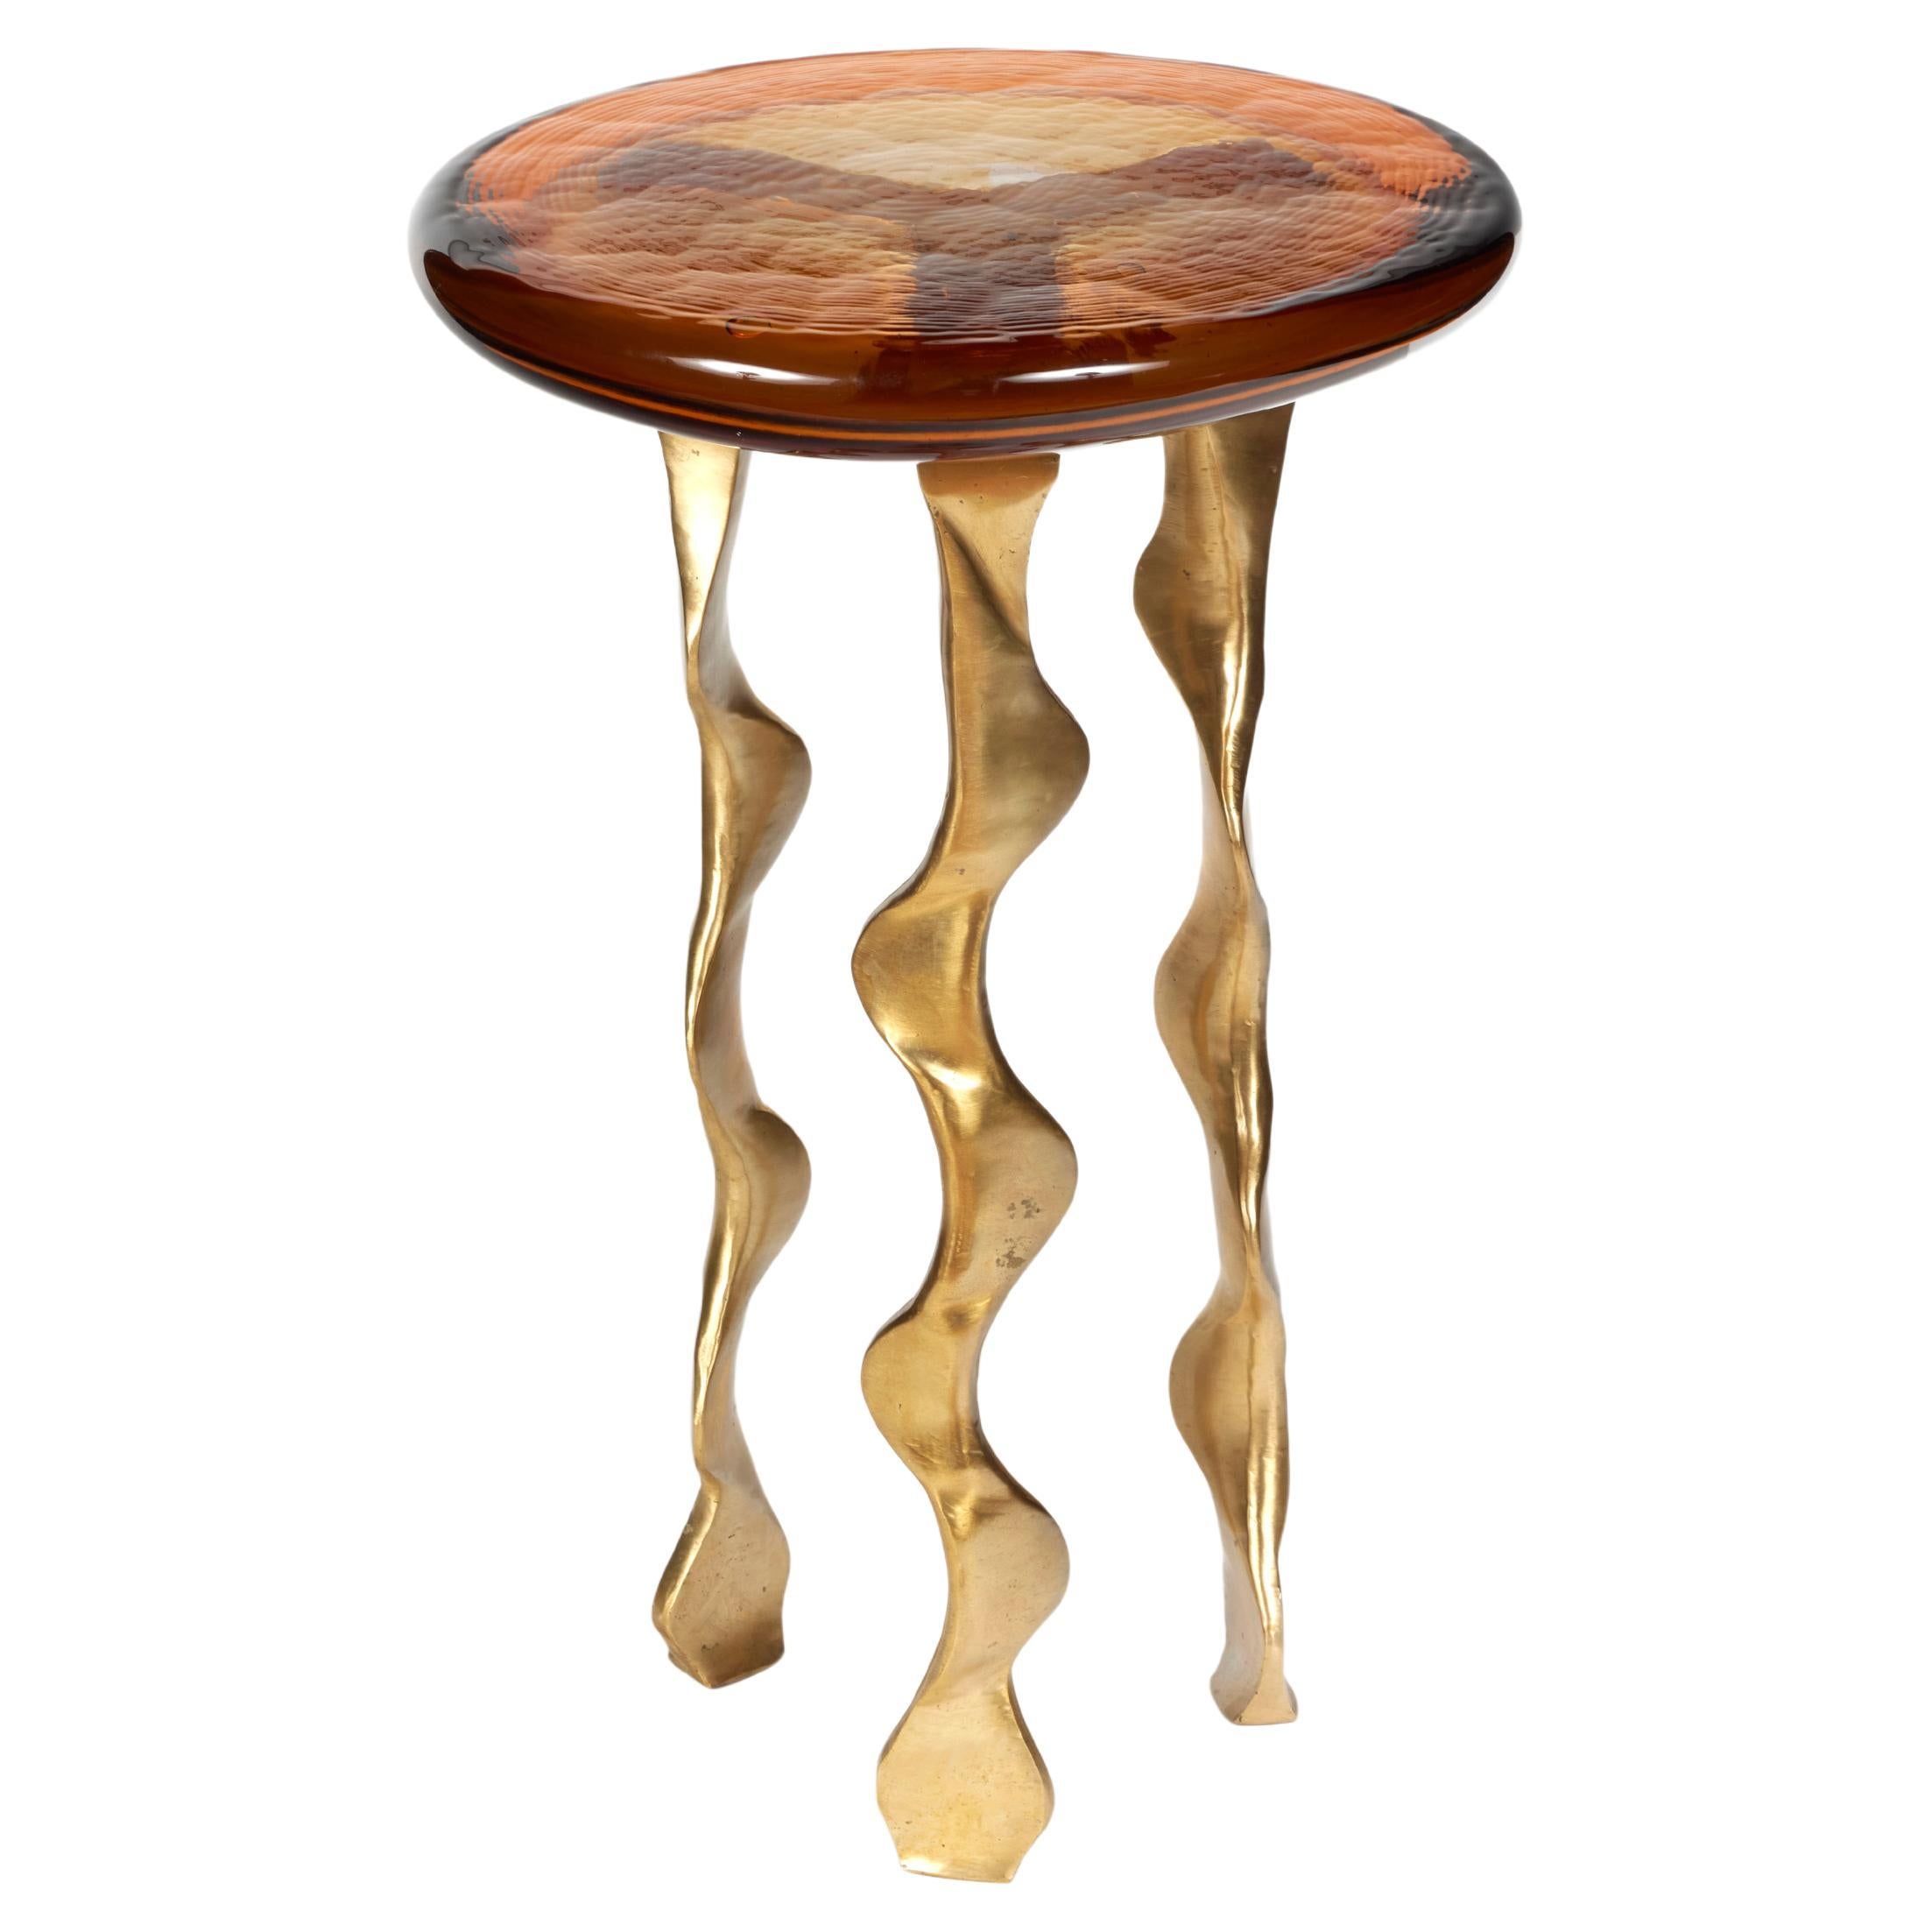 Medusa Side Table Designed by Laura Gonzalez